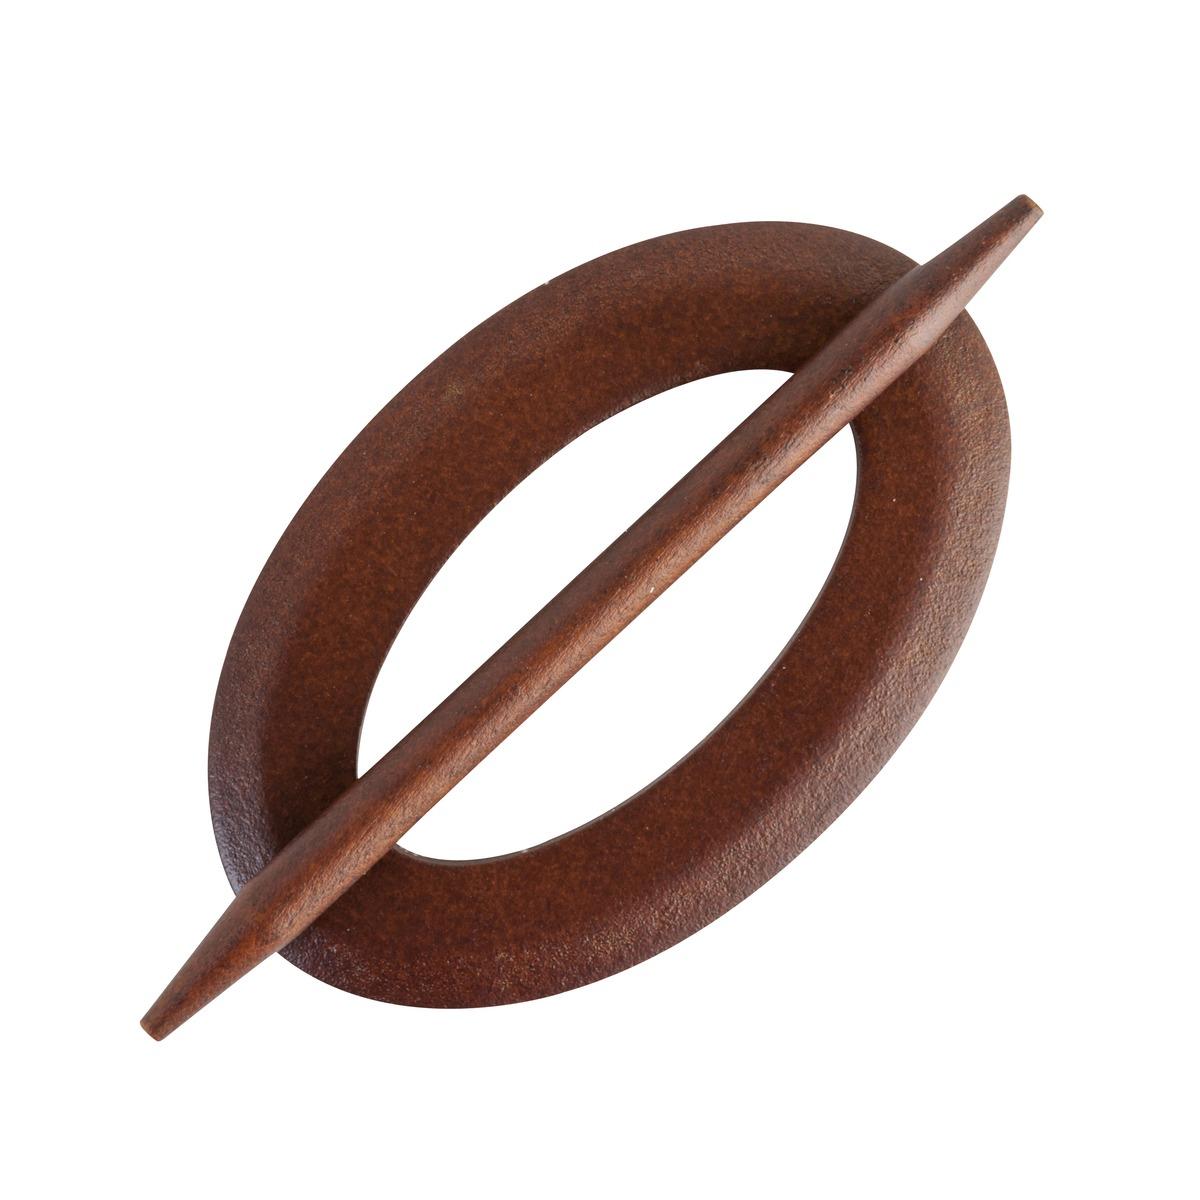 Embrasse ovale en bois - 6,5 x 10 cm - Tige 13 cm - Chêne